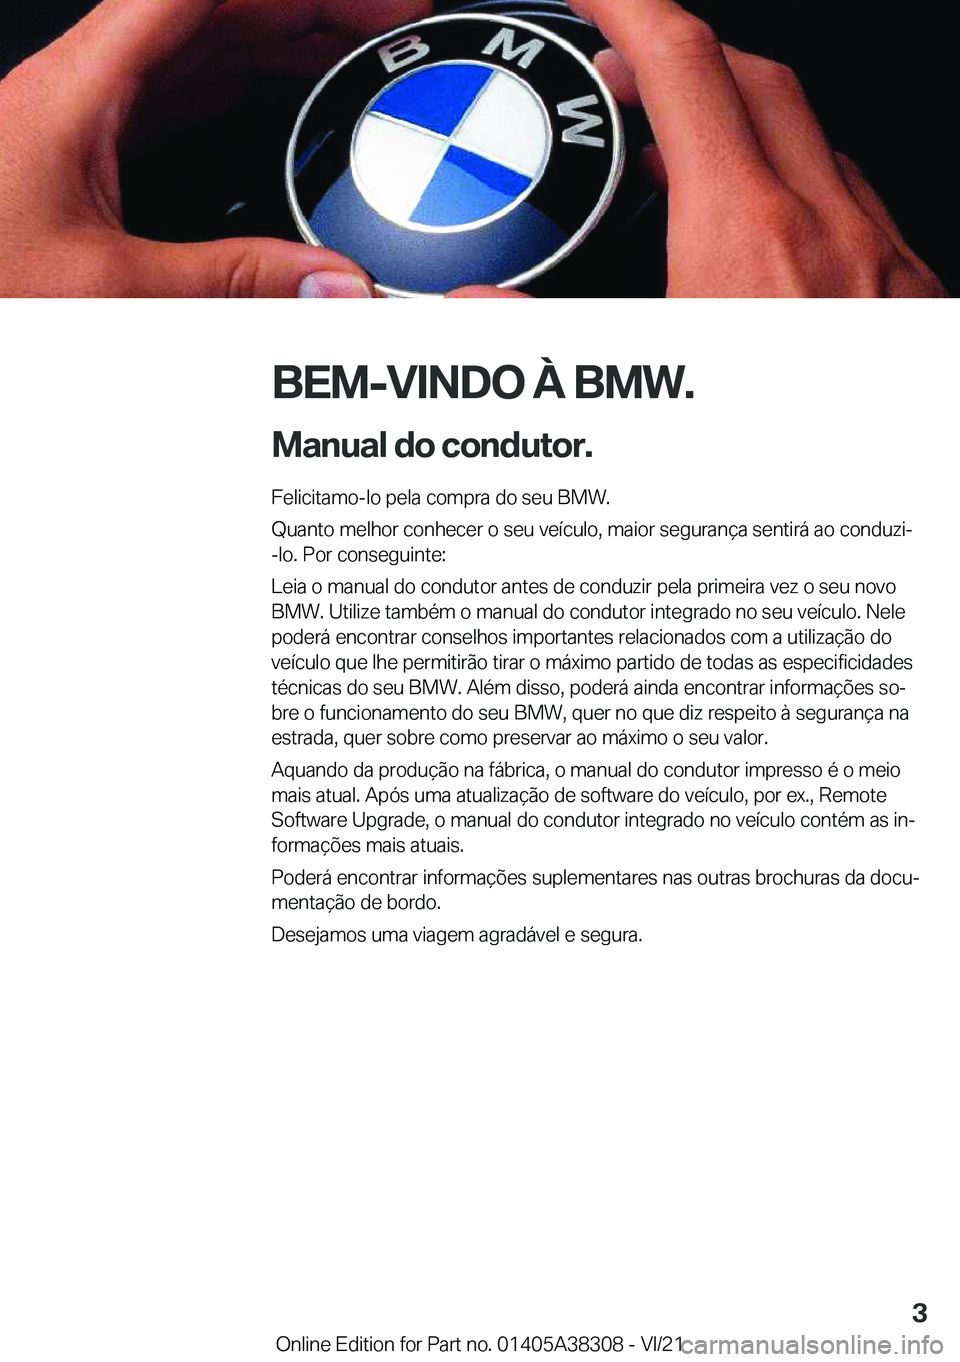 BMW 2 SERIES GRAN COUPE 2022  Manual do condutor (in Portuguese) �B�E�M�-�V�I�N�D�O��À��B�M�W�.
�M�a�n�u�a�l��d�o��c�o�n�d�u�t�o�r�. �F�e�l�i�c�i�t�a�m�o�-�l�o��p�e�l�a��c�o�m�p�r�a��d�o��s�e�u��B�M�W�.
�Q�u�a�n�t�o��m�e�l�h�o�r��c�o�n�h�e�c�e�r��o��s